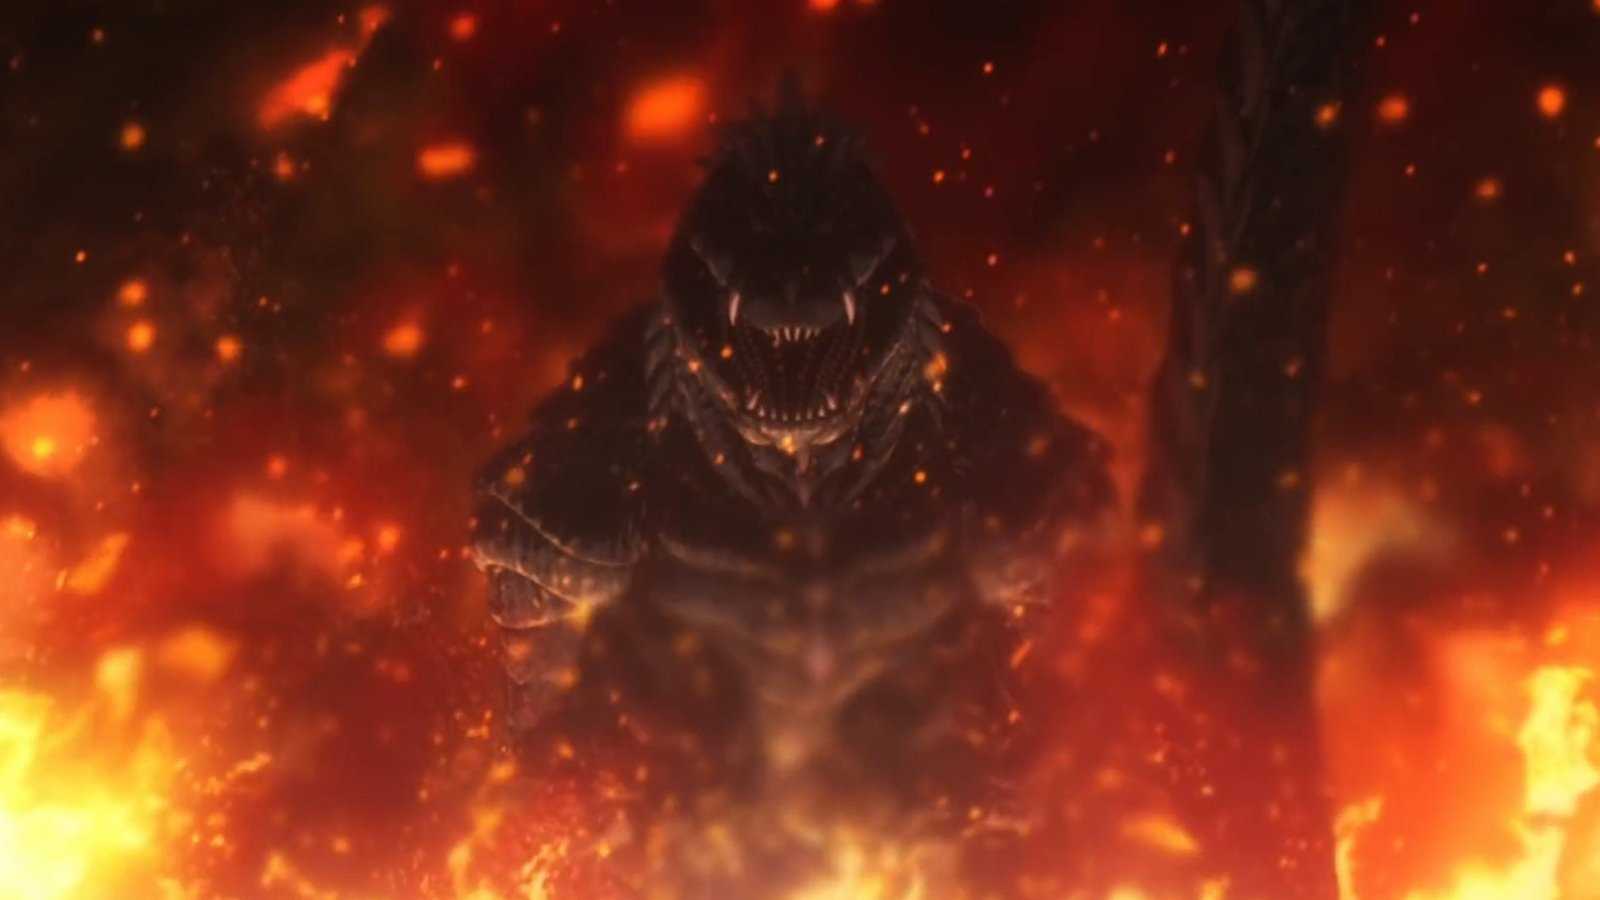 Kaiju News Outlet do you think of Godzilla Ultima so far?